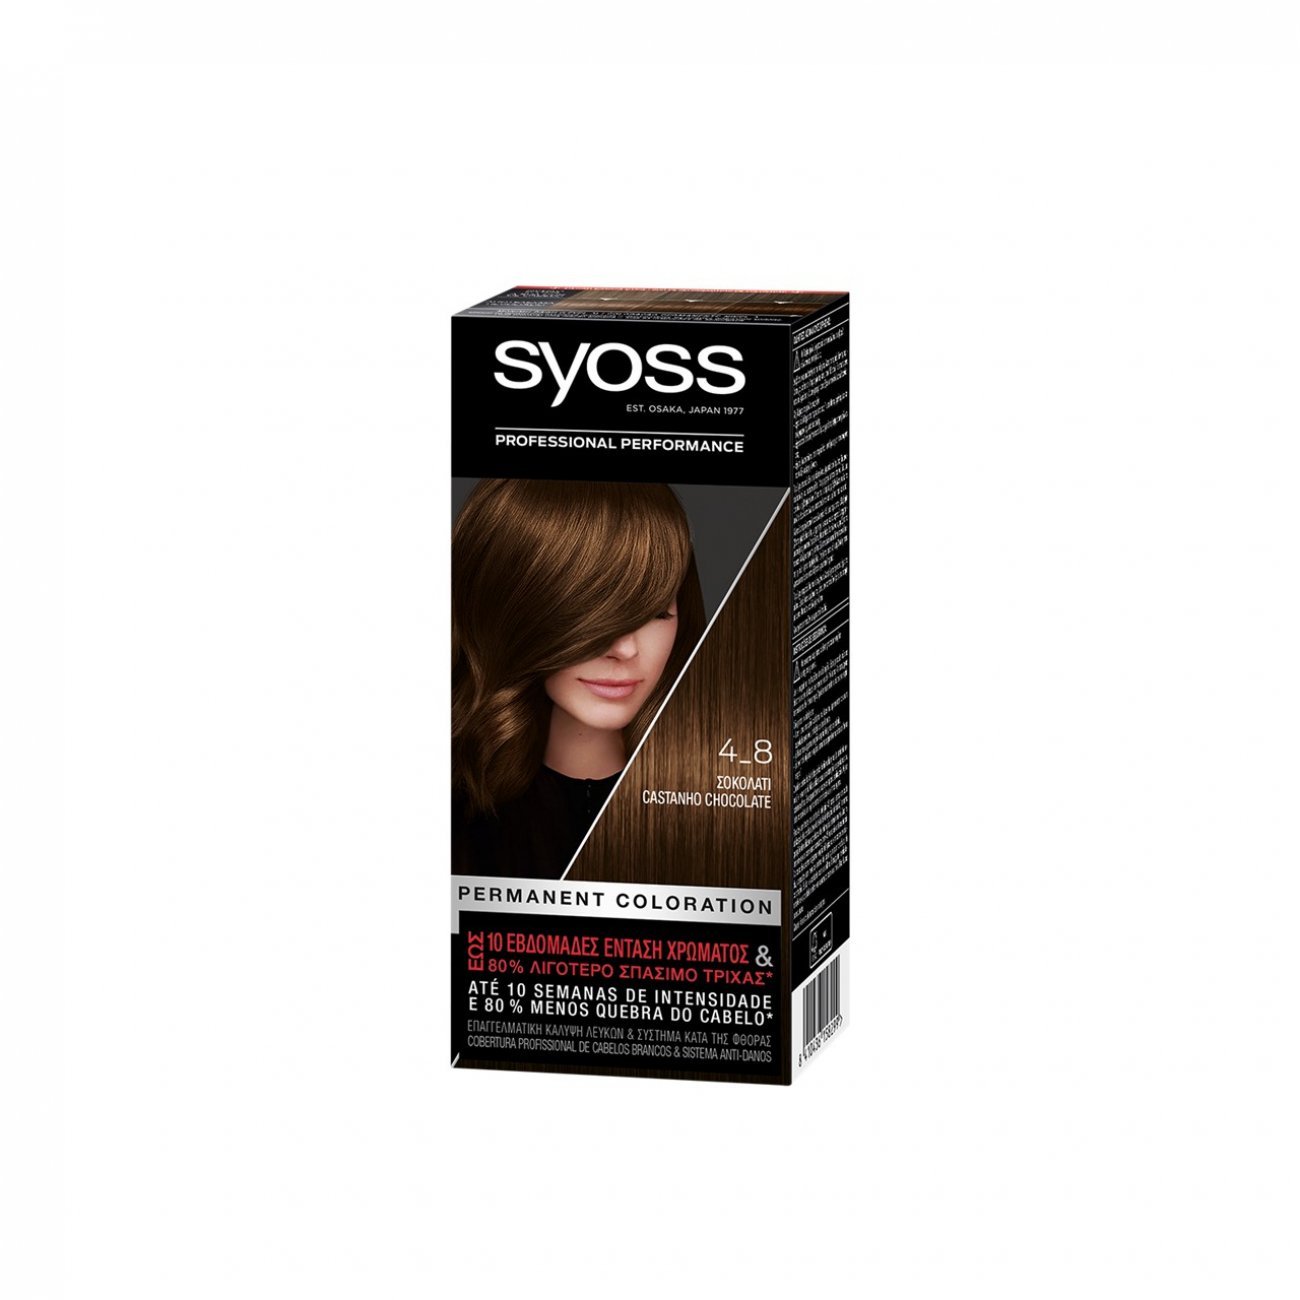 Buy Syoss Permanent Coloration 1_4 Blue Black Permanent Hair Dye · Australia